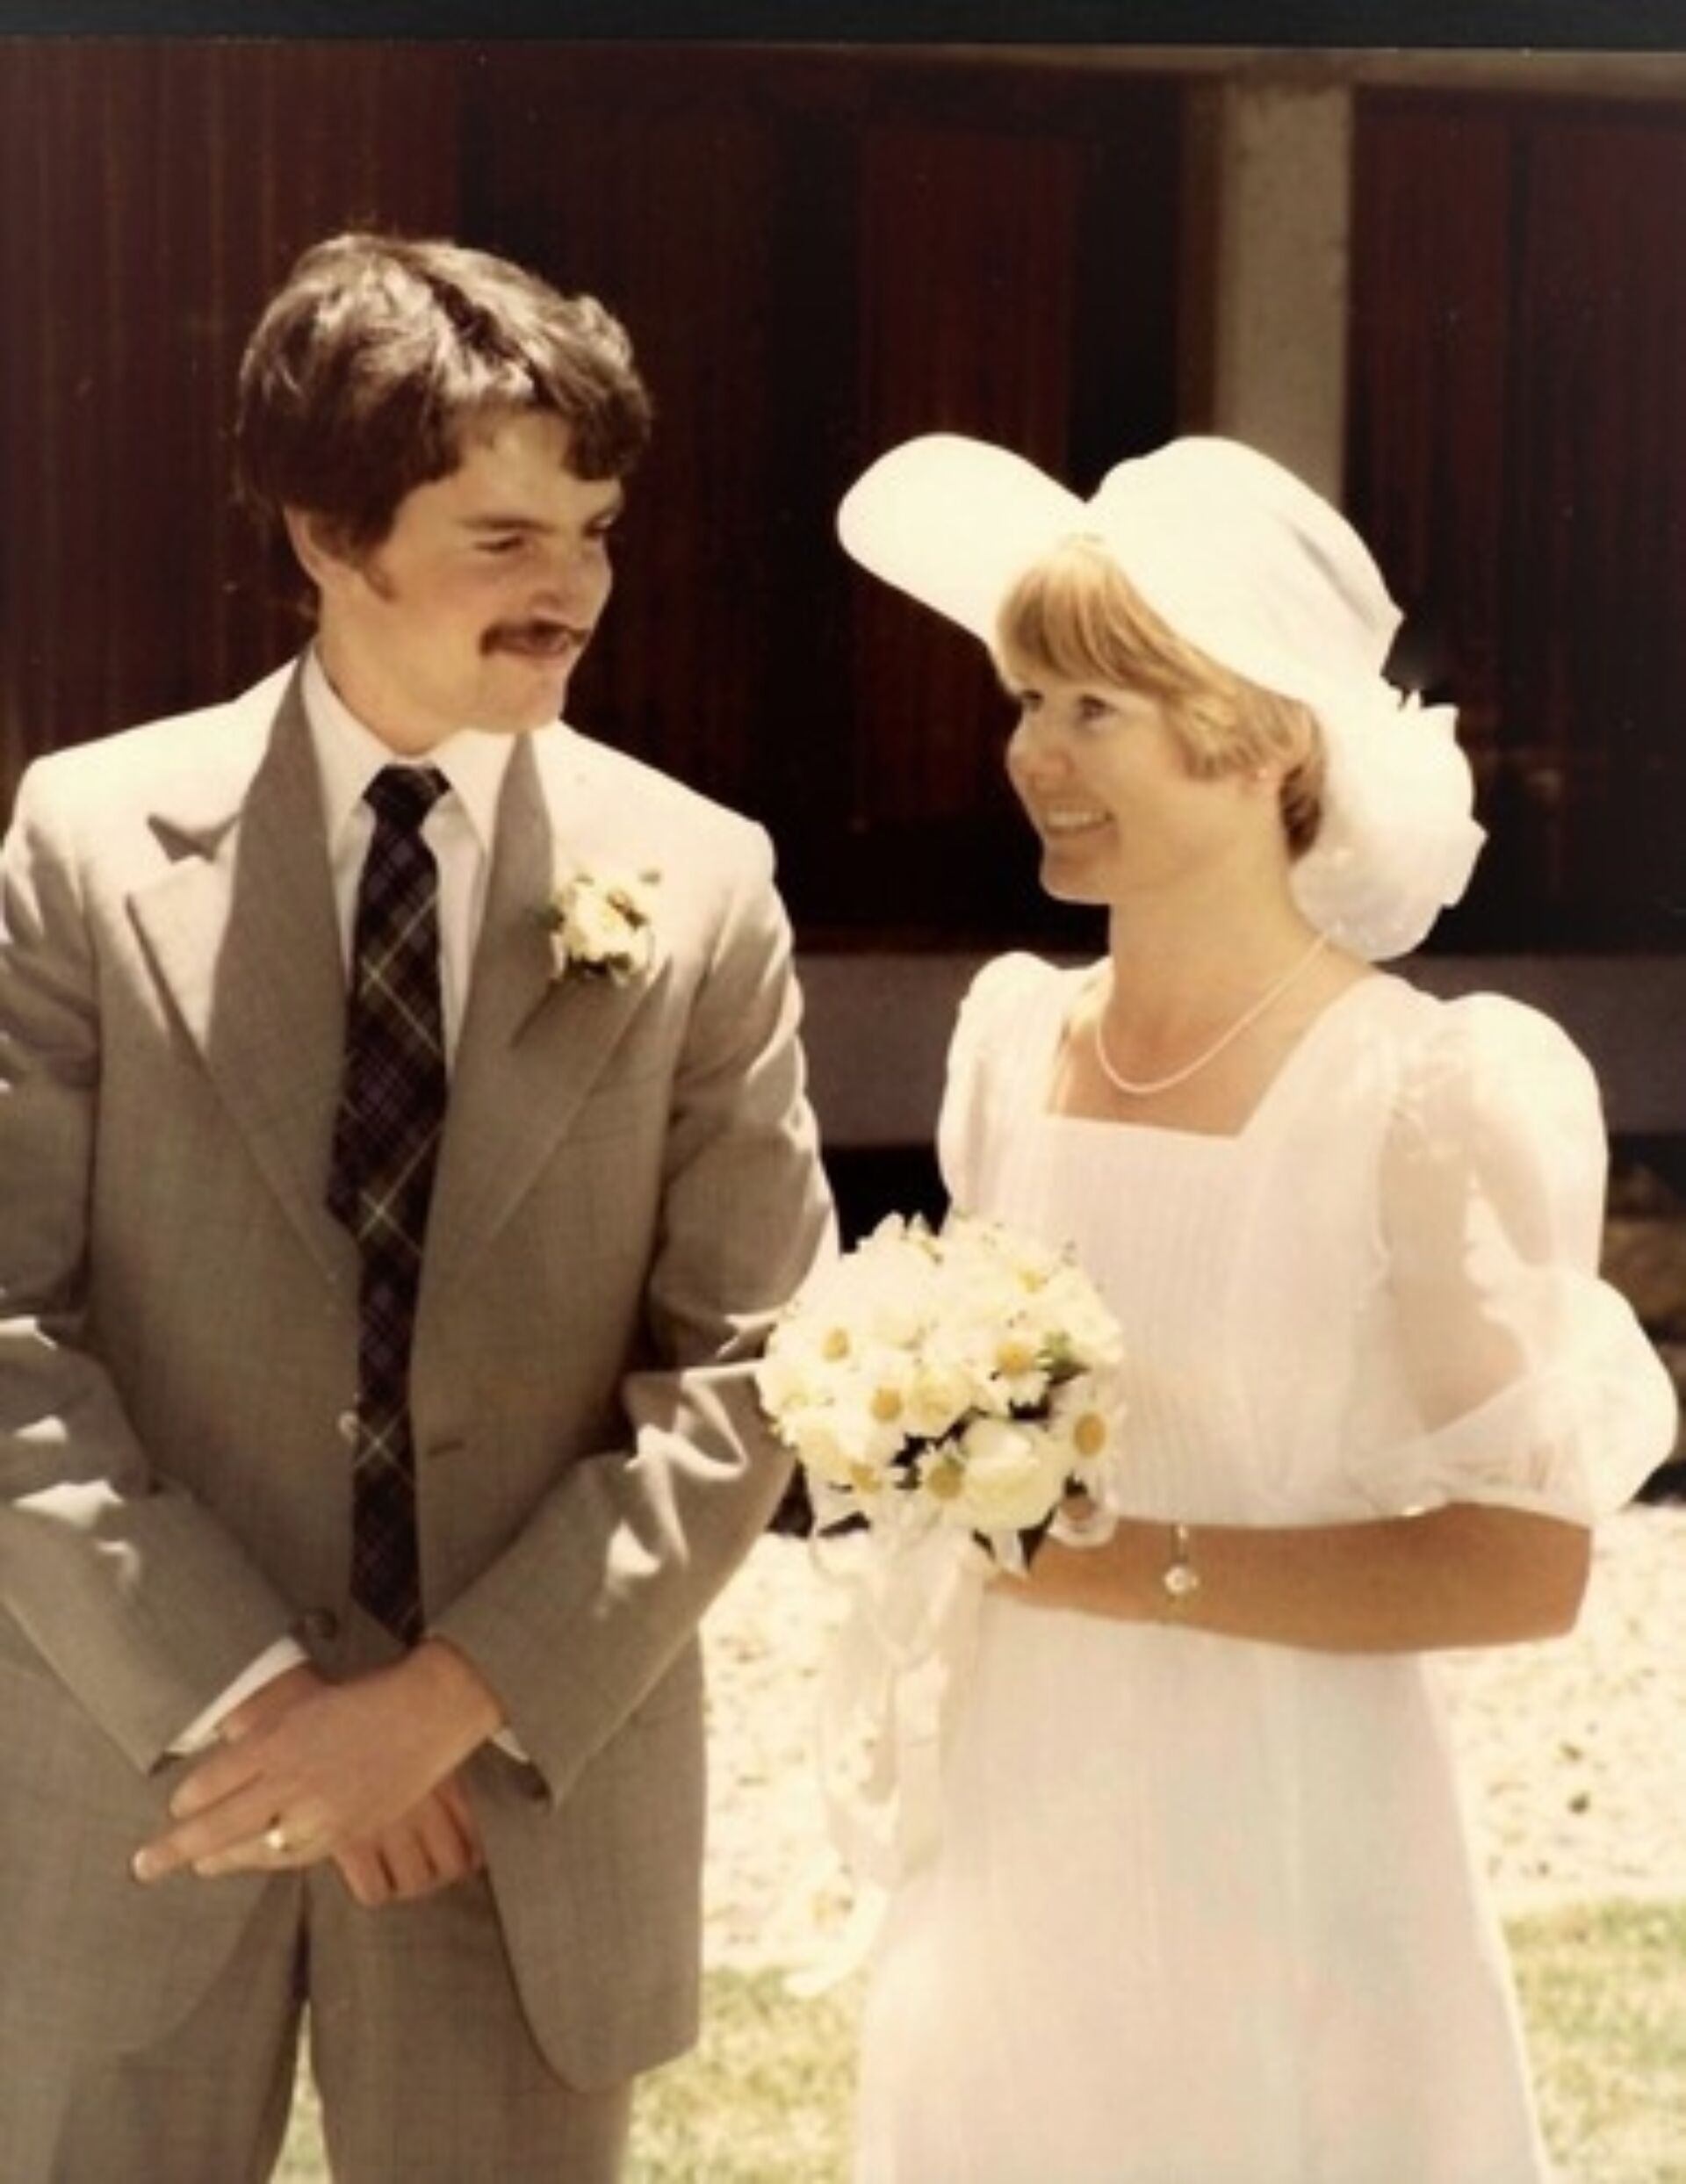 Robin Brown and Jill Mc Spedden Wedding 4 12 76 at Burgmann College Front Lawn Then 1 2 1